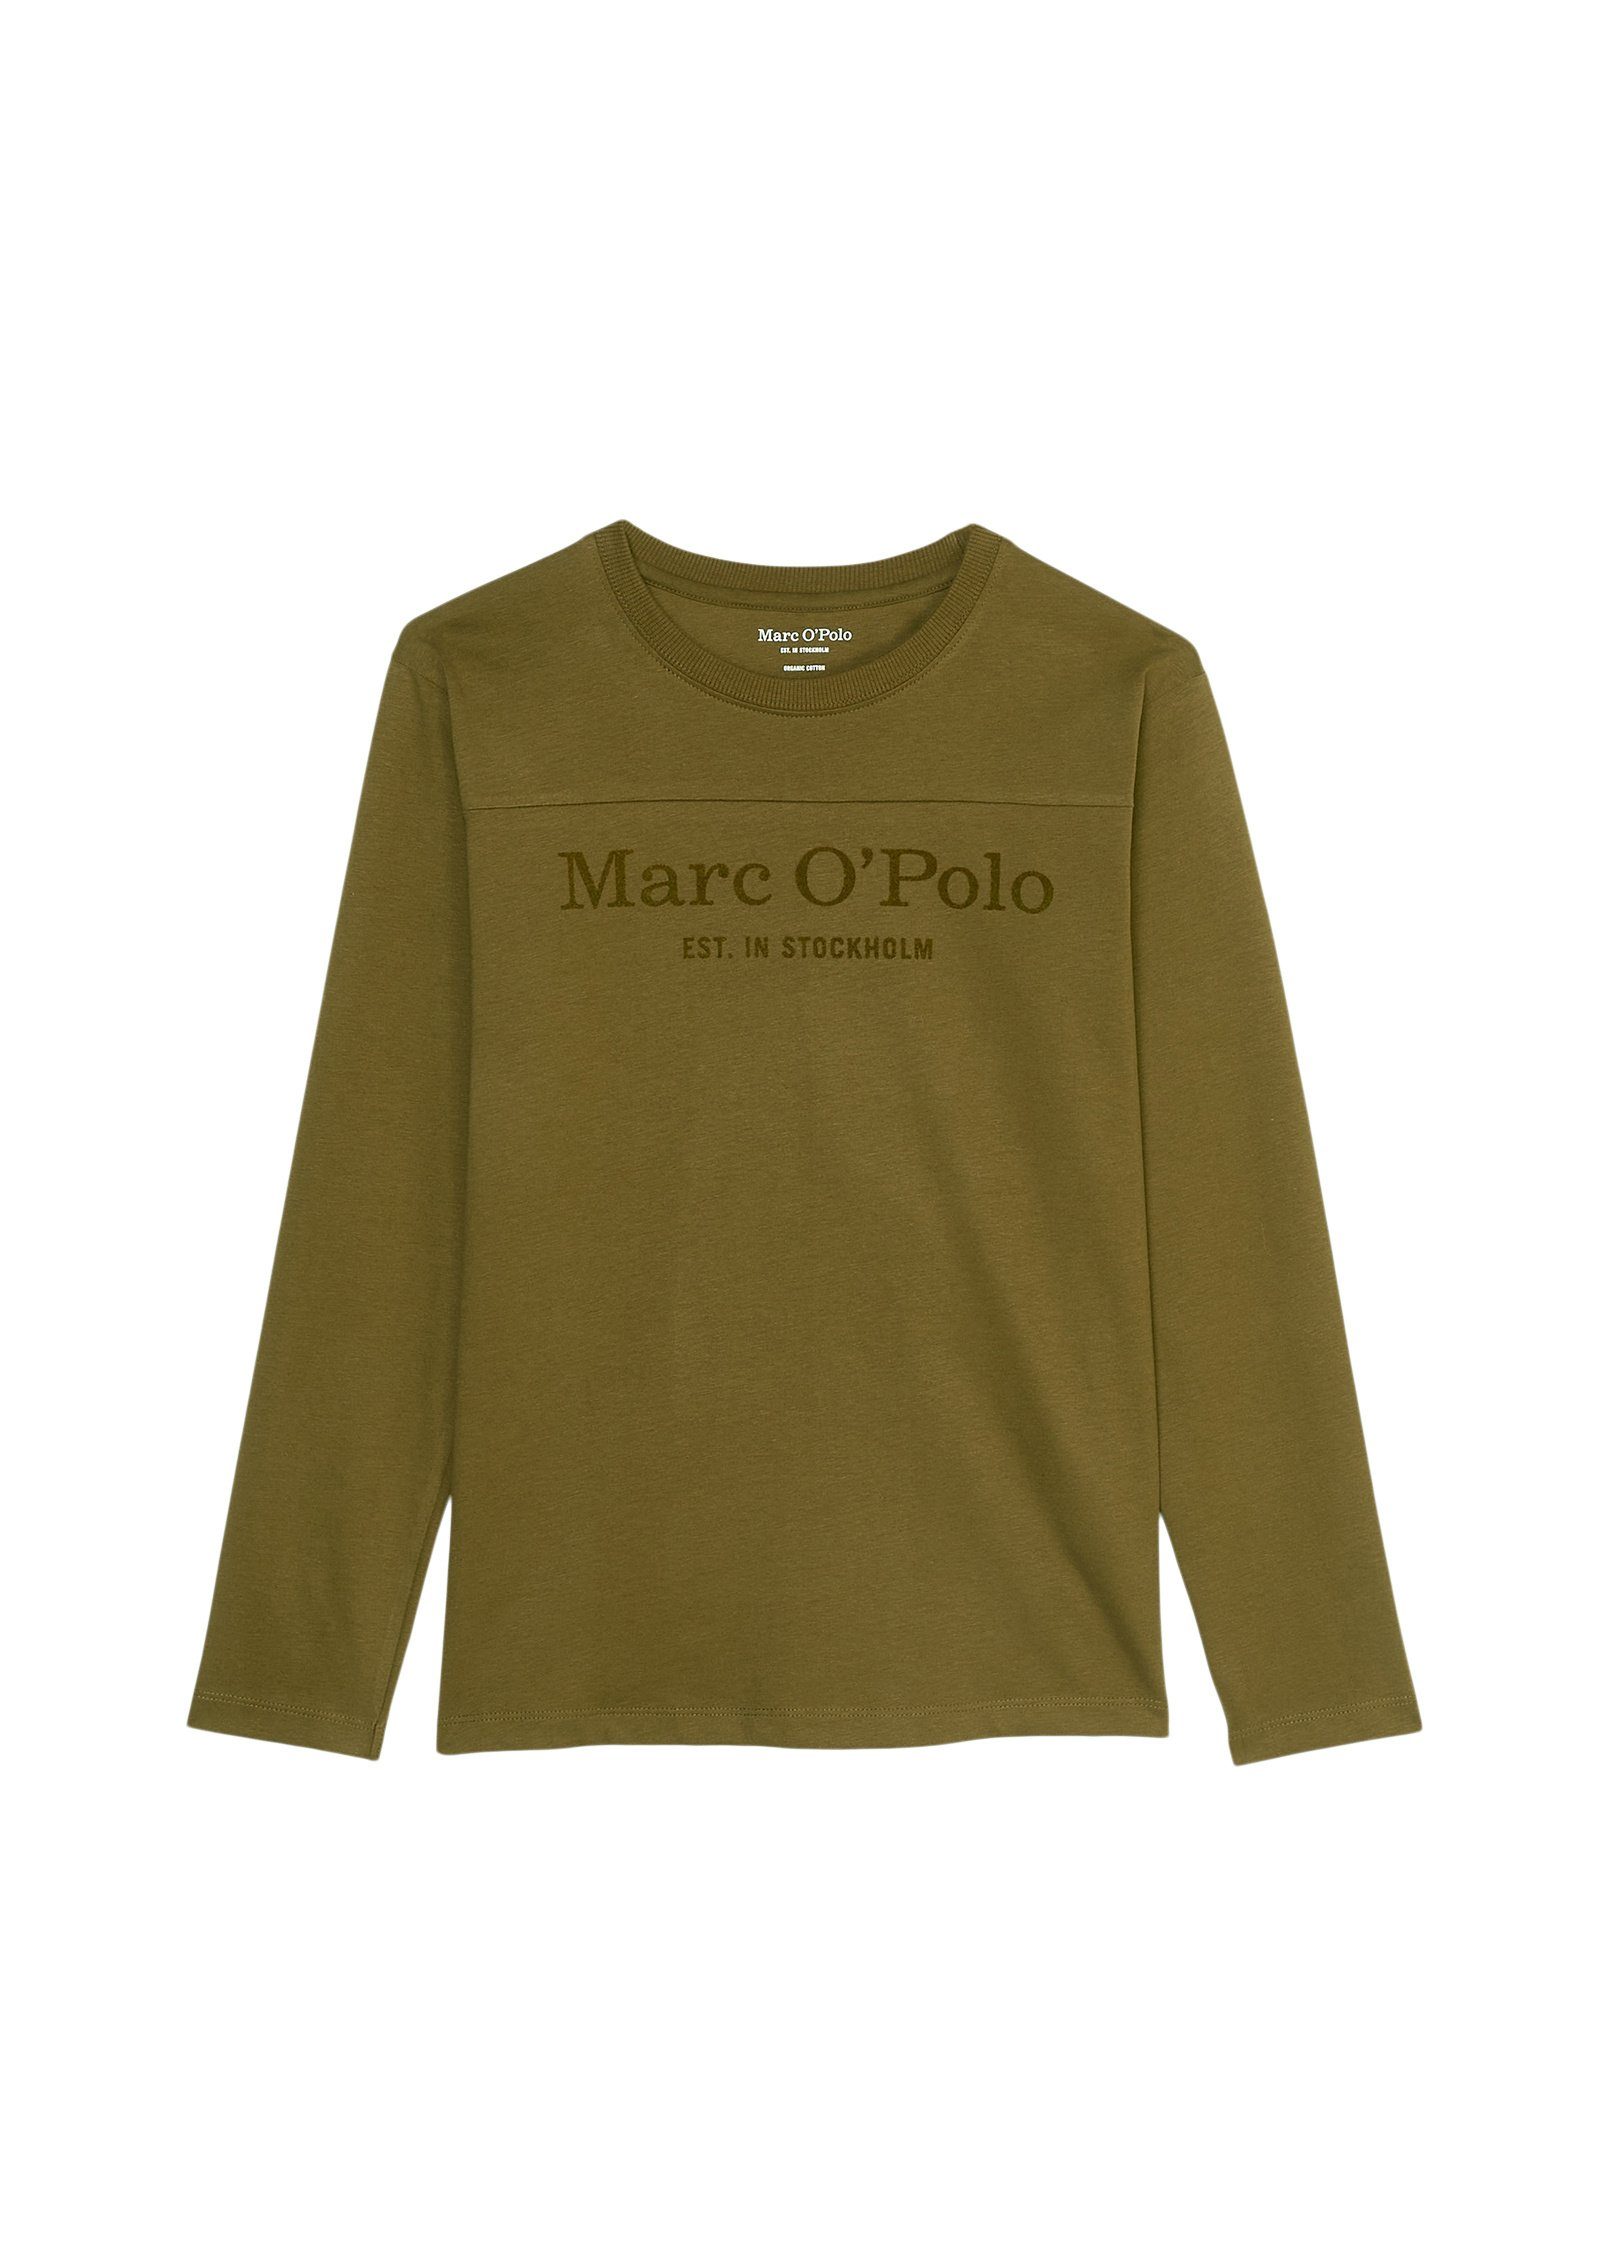 softem O'Polo Marc Bio-Baumwoll-Jersey aus grün Langarmshirt